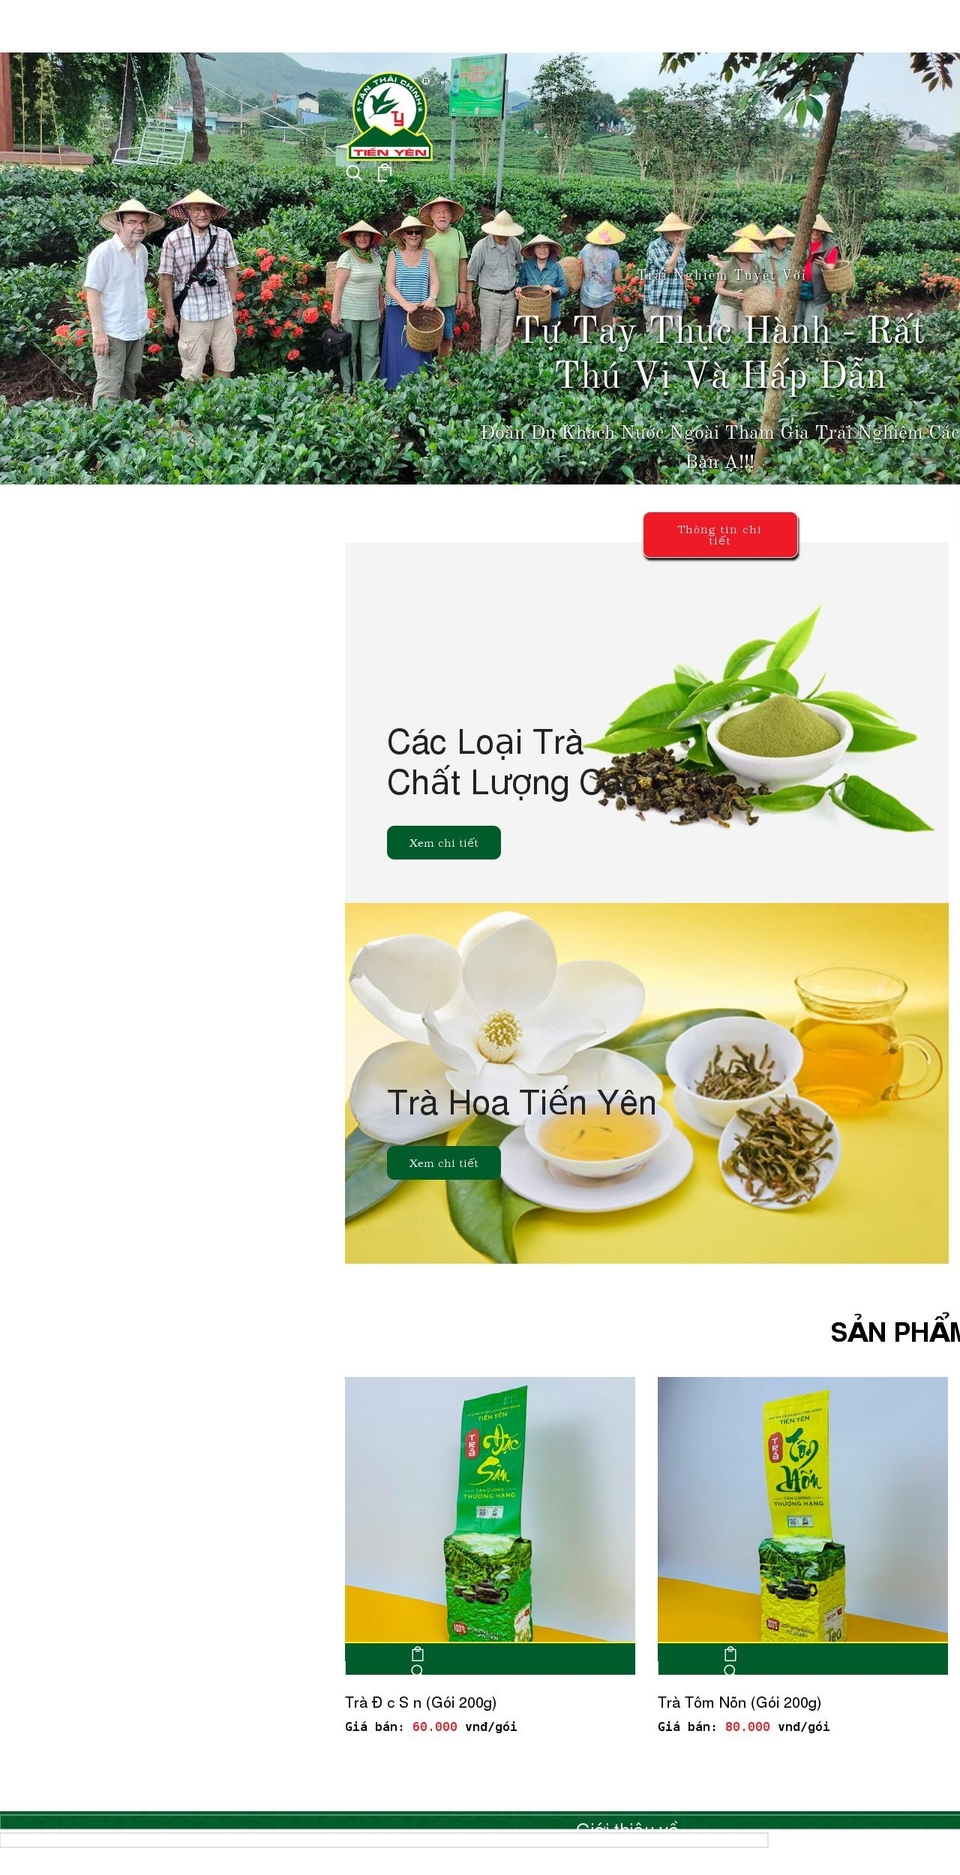 chetienyen.vn shopify website screenshot